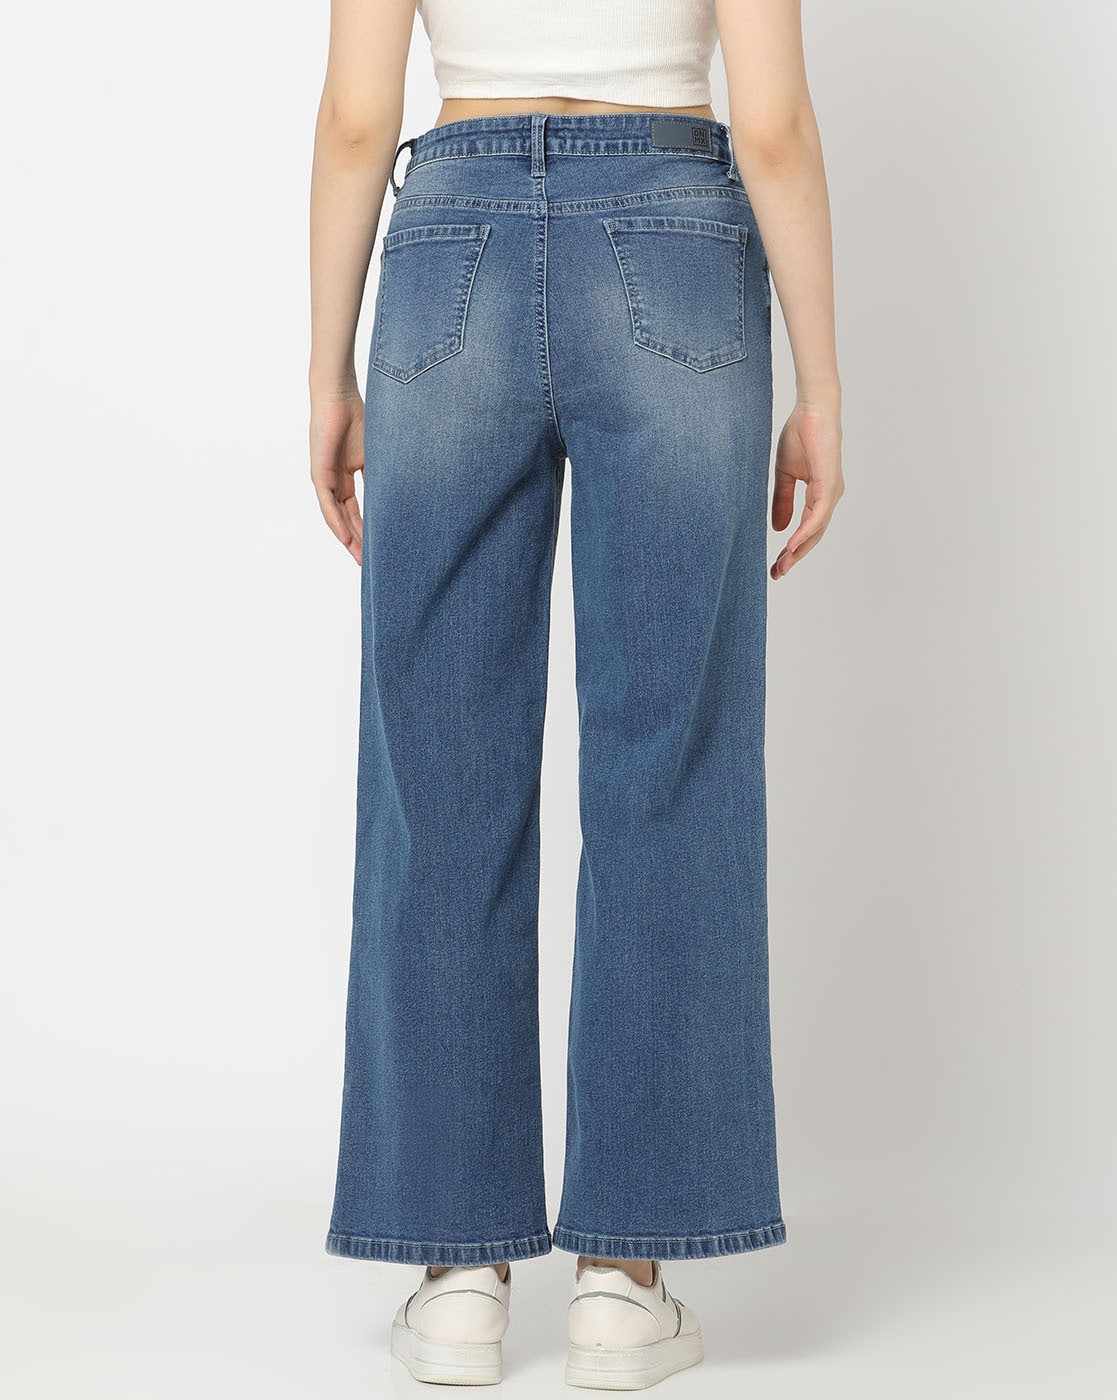 Gap 1969 High Rise Trouser | Clothes design, Trousers, Gap jeans